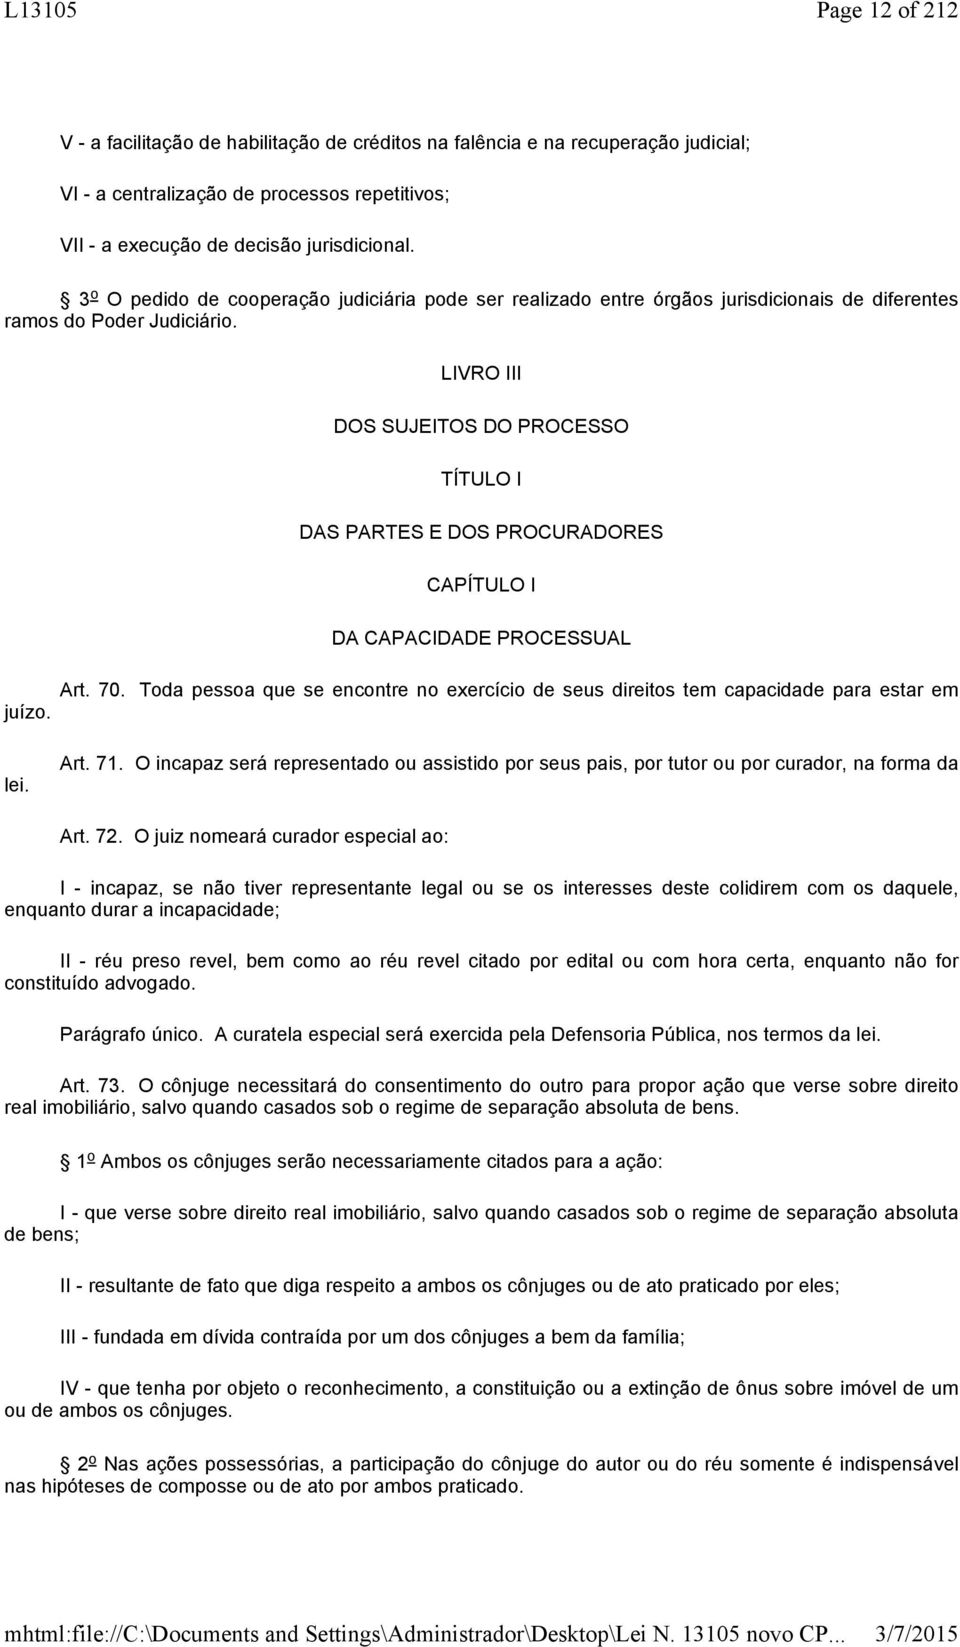 LIVRO III DOS SUJEITOS DO PROCESSO TÍTULO I DAS PARTES E DOS PROCURADORES CAPÍTULO I DA CAPACIDADE PROCESSUAL juízo. lei. Art. 70.